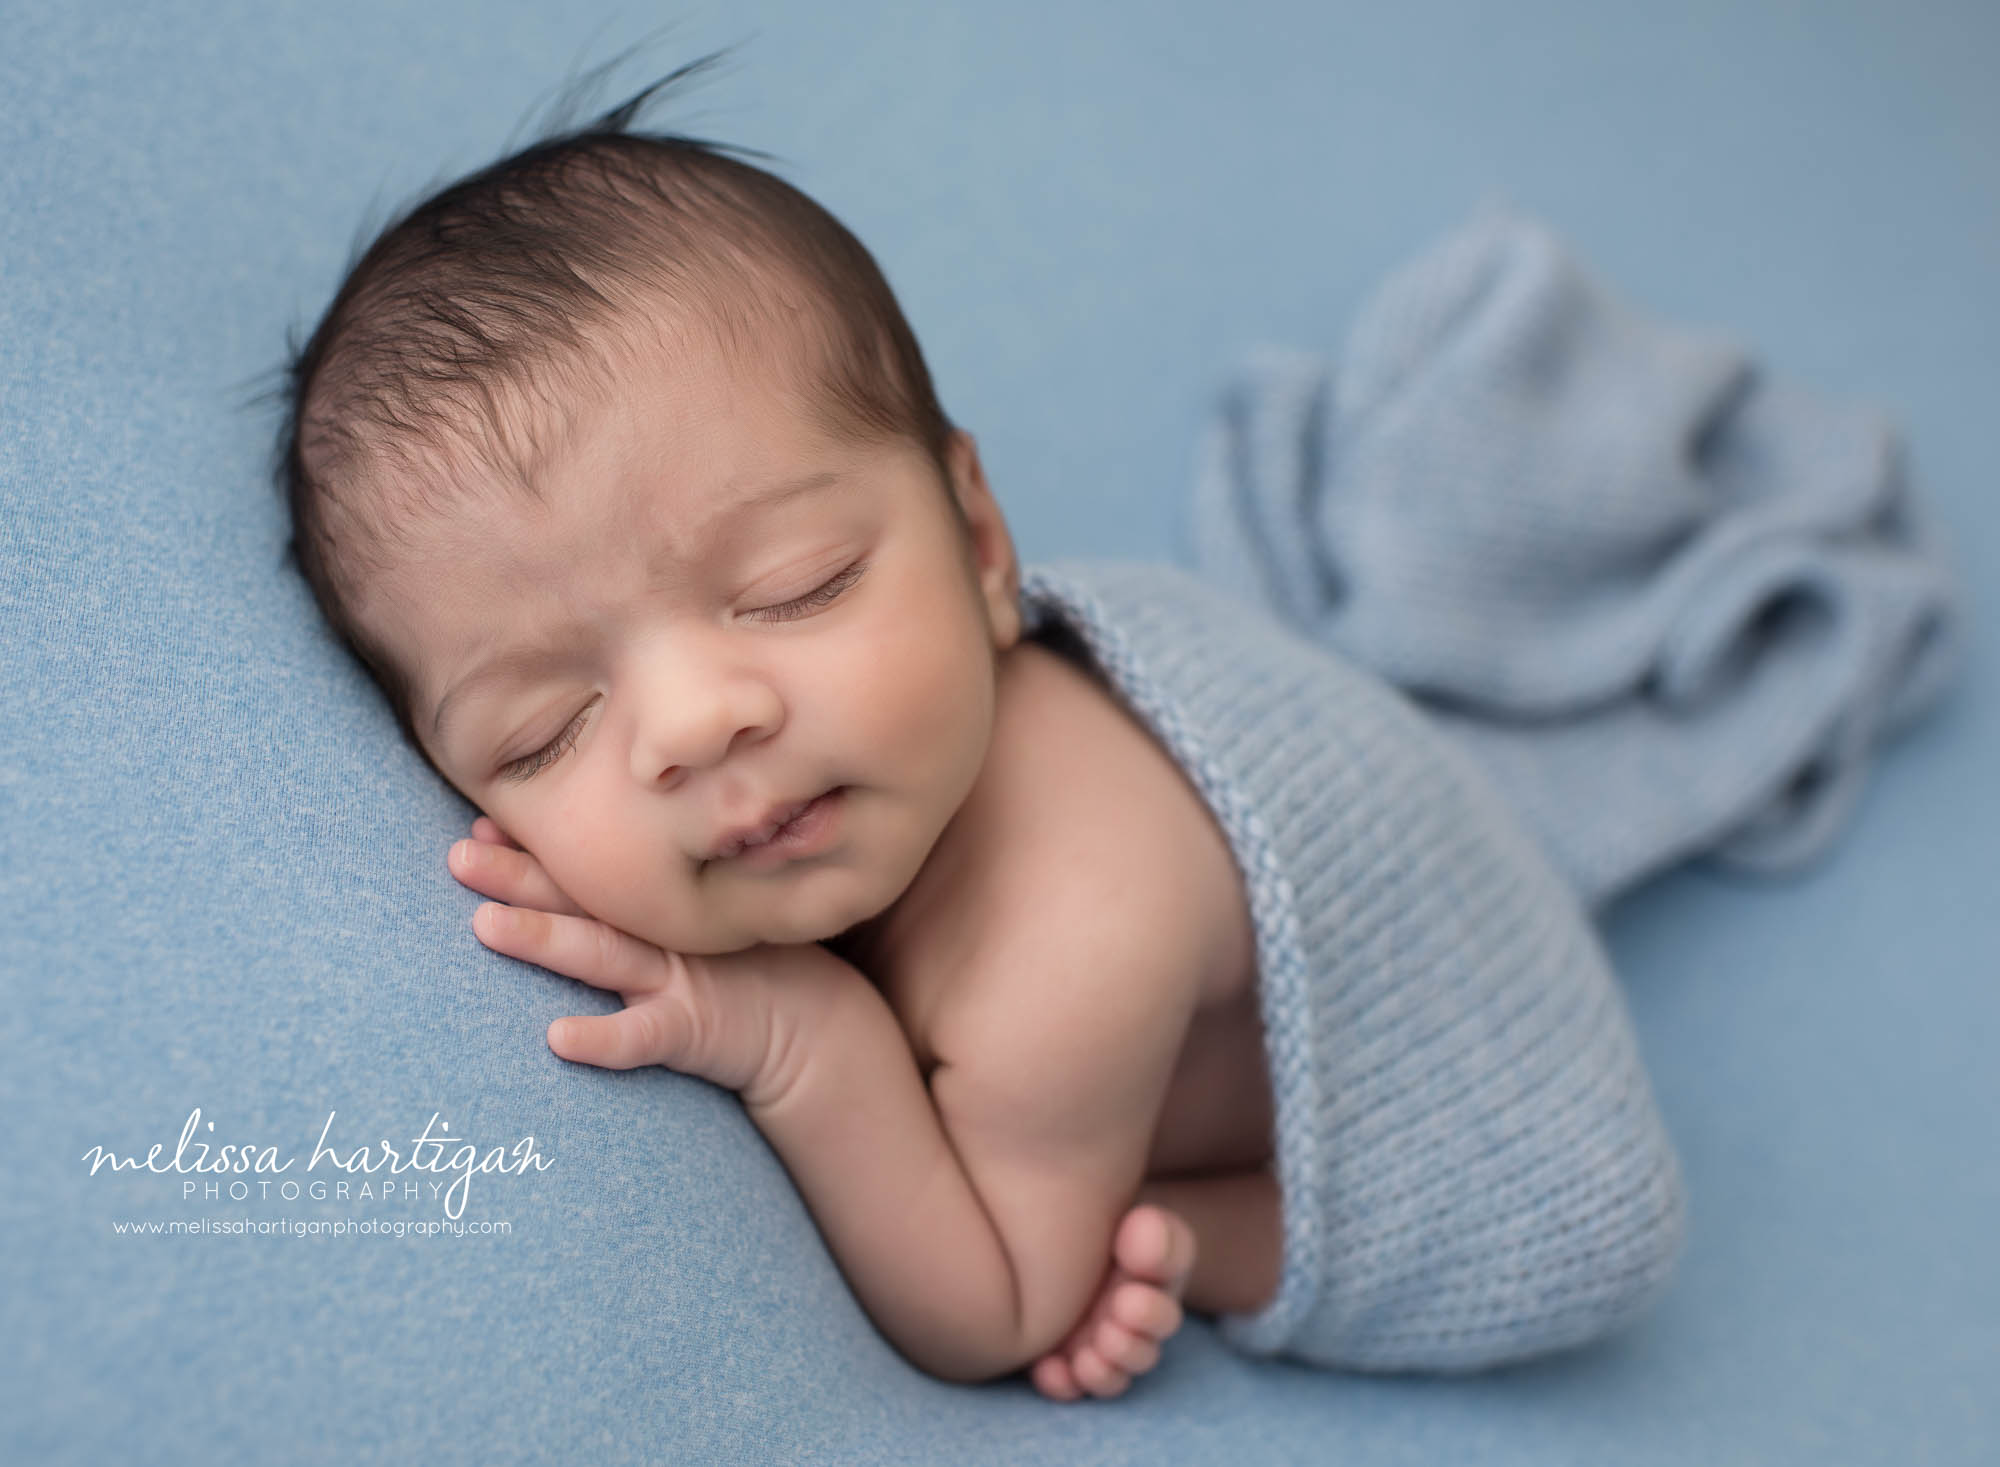 Newborn baby boy posed in newborn photography posed session manchester CT newborn photography